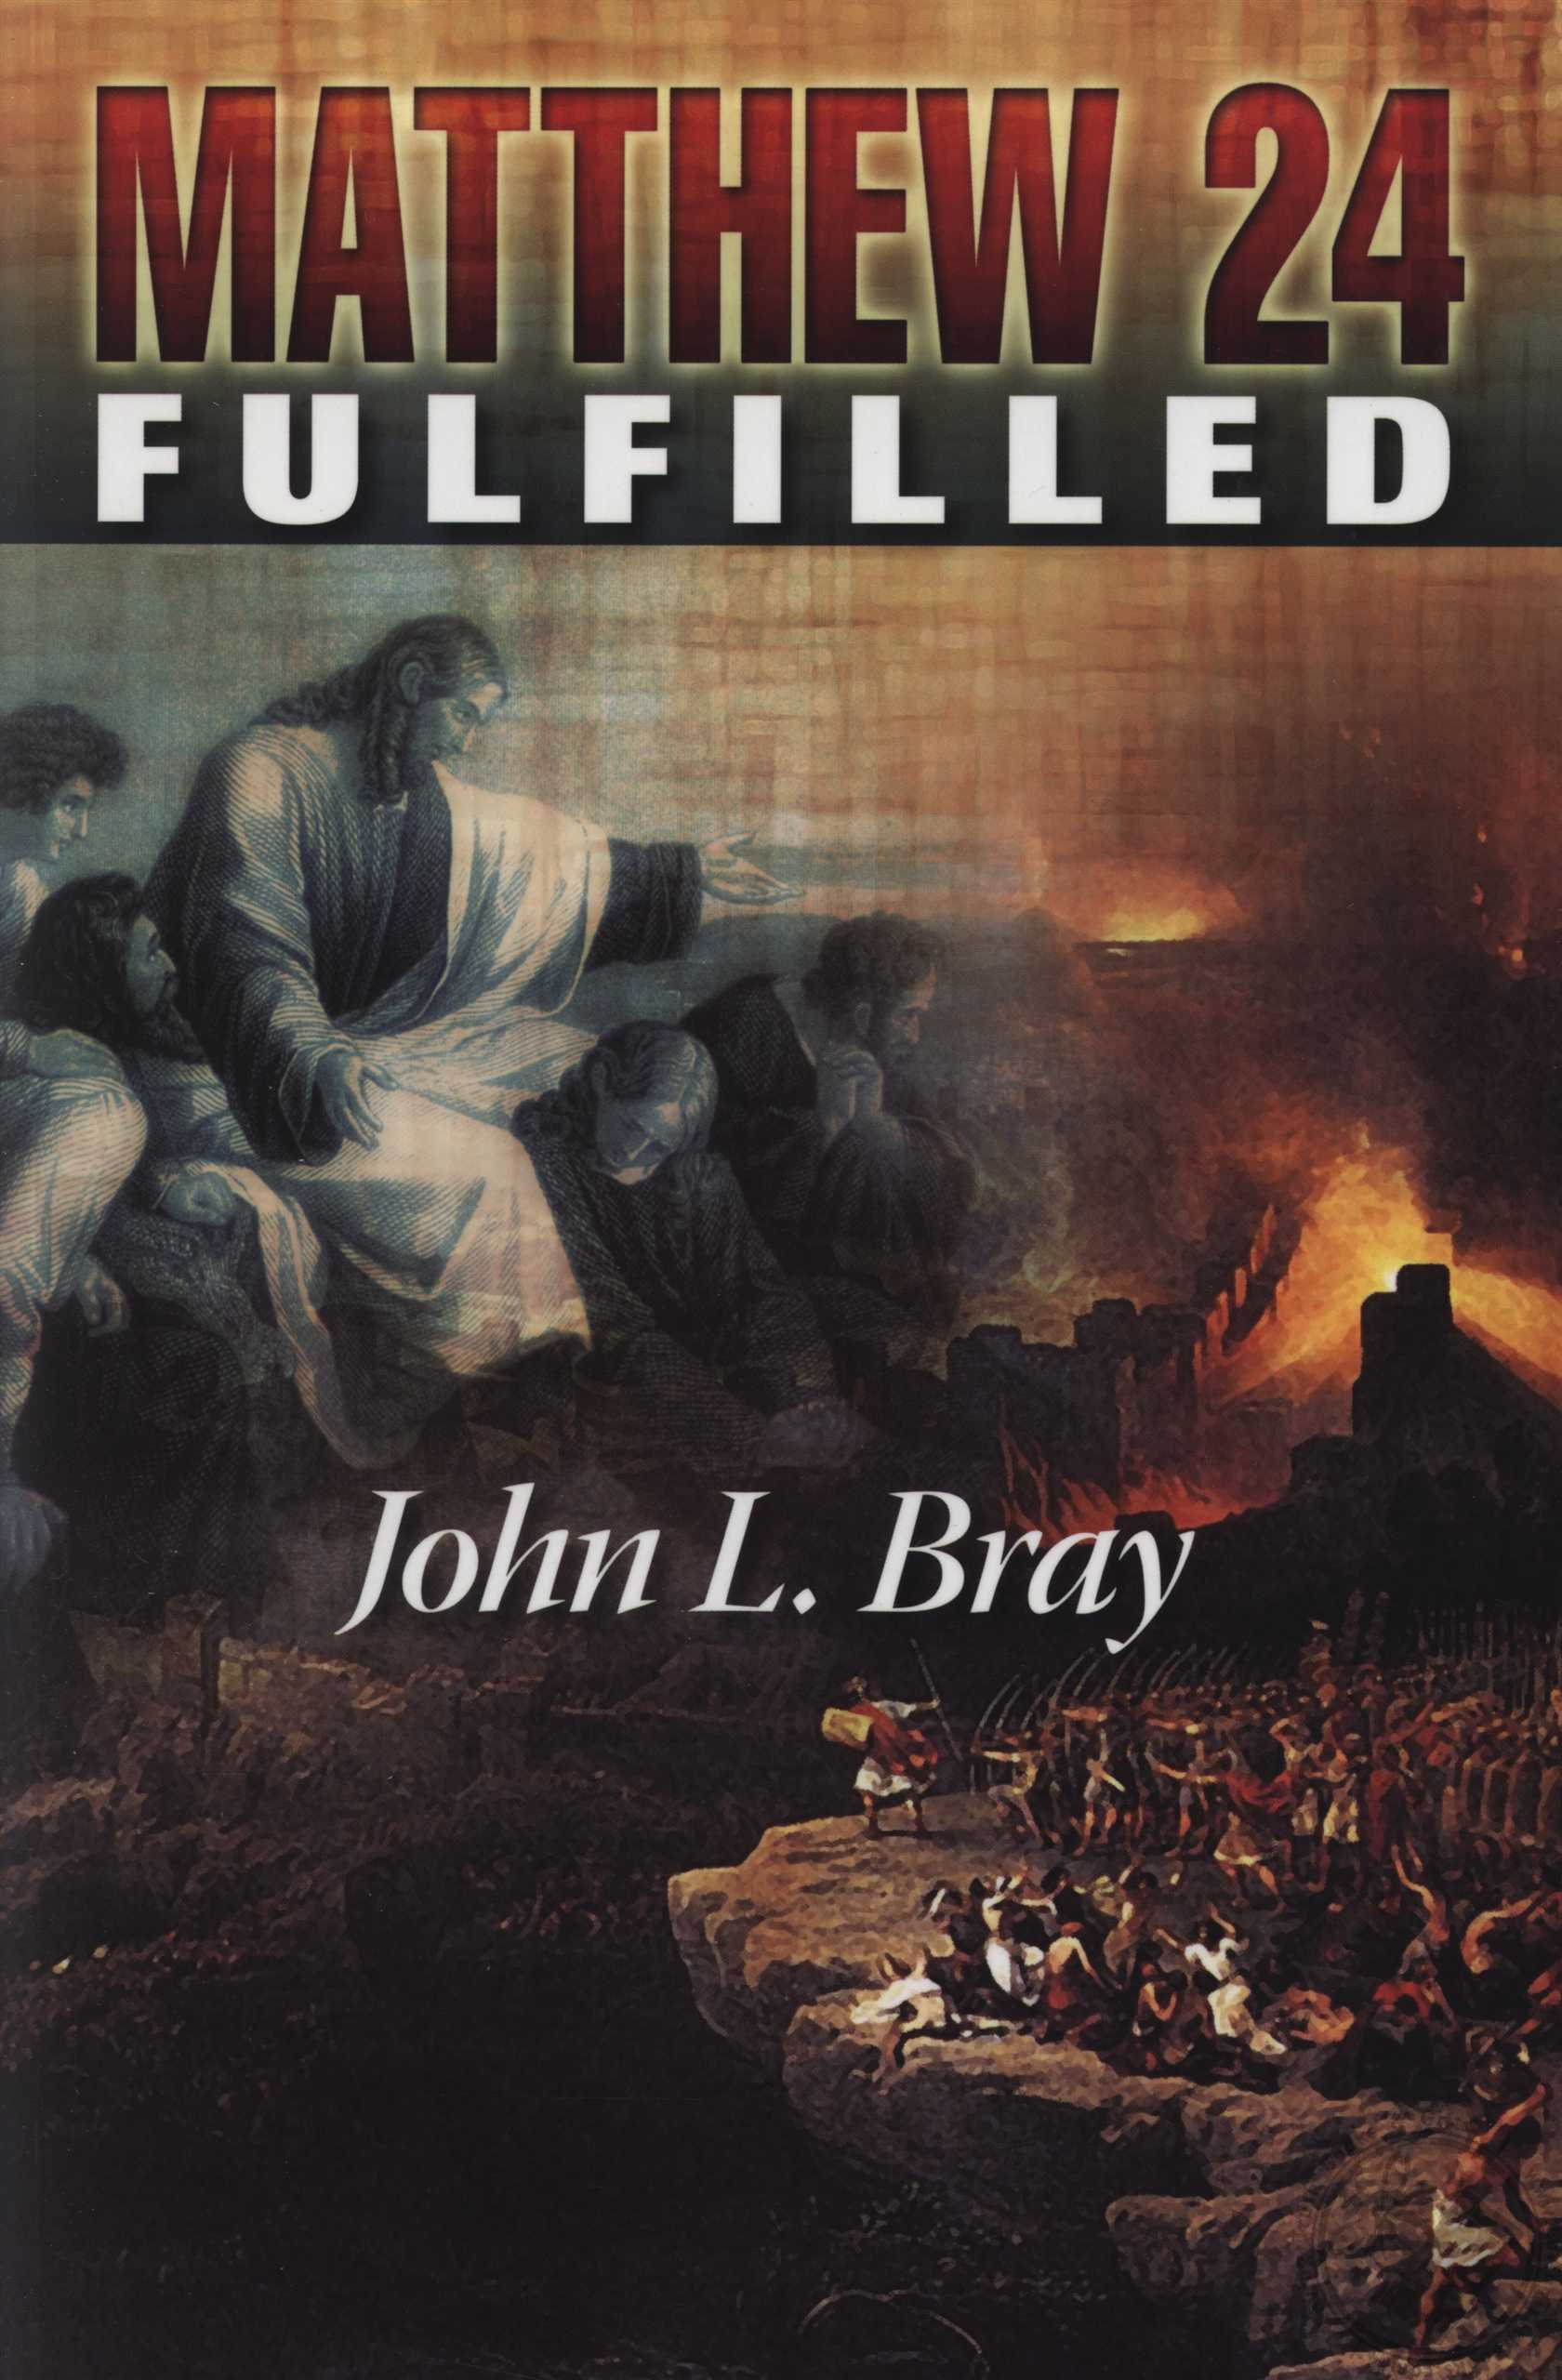 Matthew 24 Fulfilled by Baptist Evangelist John Bray by John L. Bray